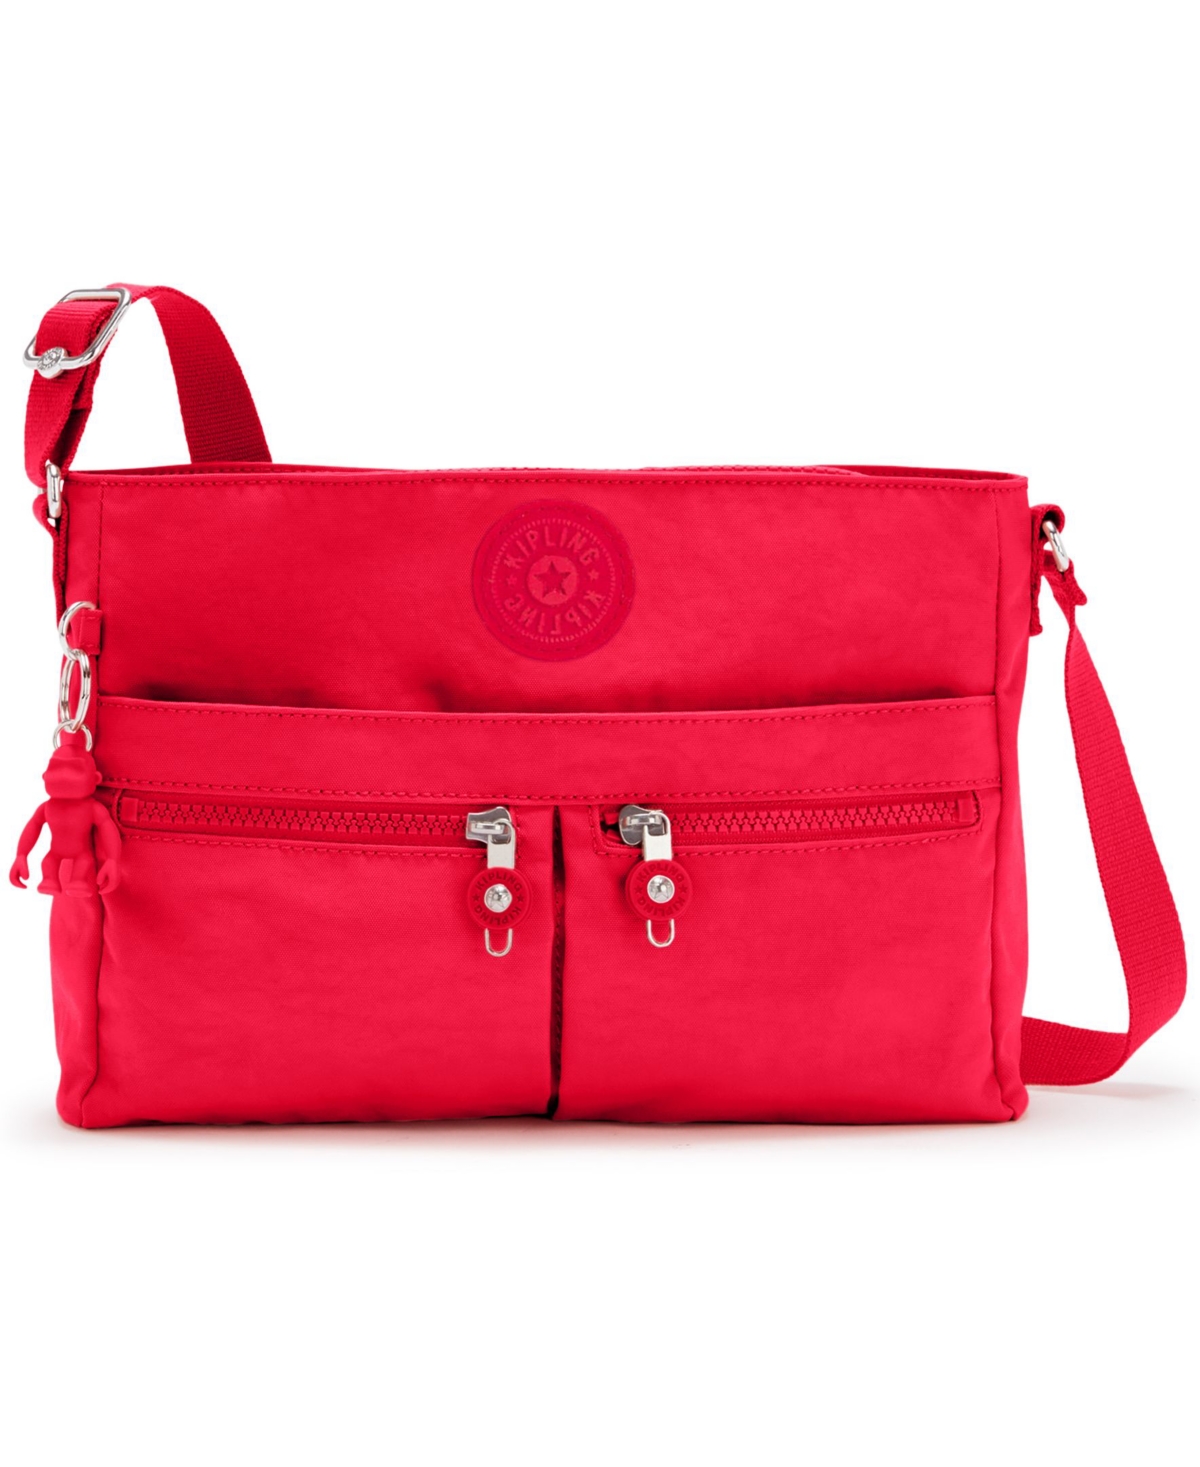 New Angie Handbag - Red Rouge